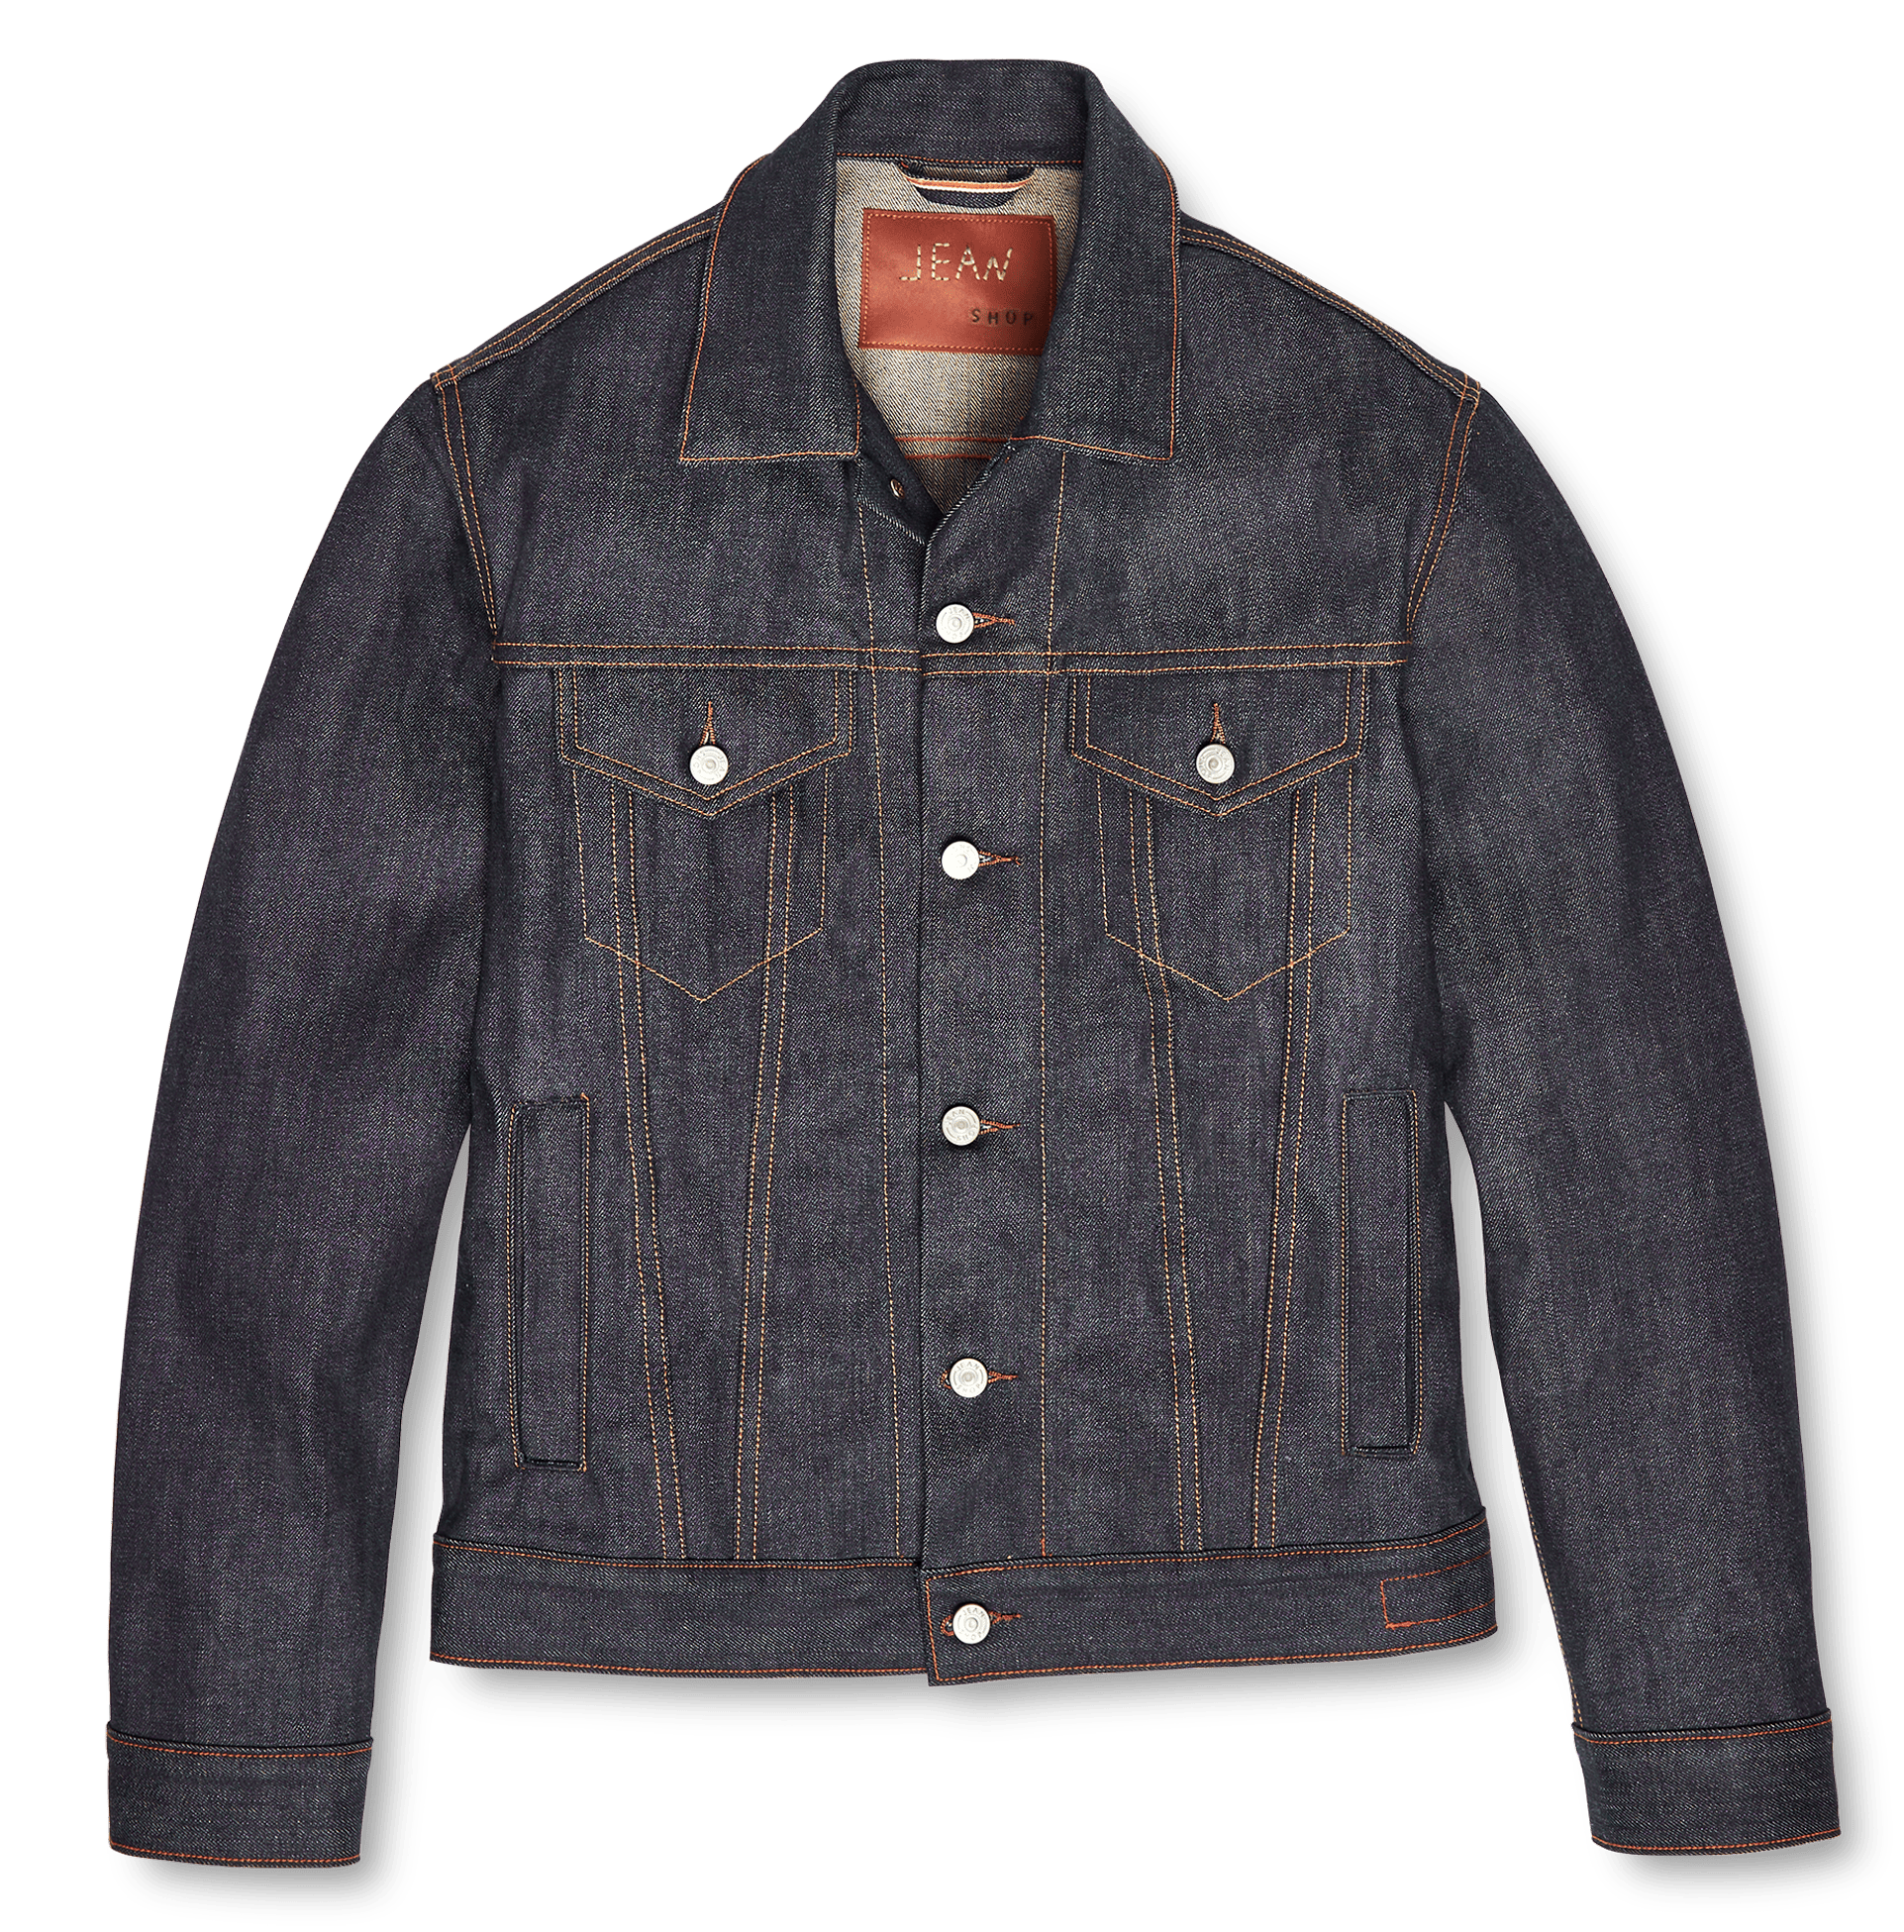 Trench Coat Men,Men's Denim Distressed Jacket Casual Button Down Trucker  Jacket Jean Coat : Sports & Outdoors 